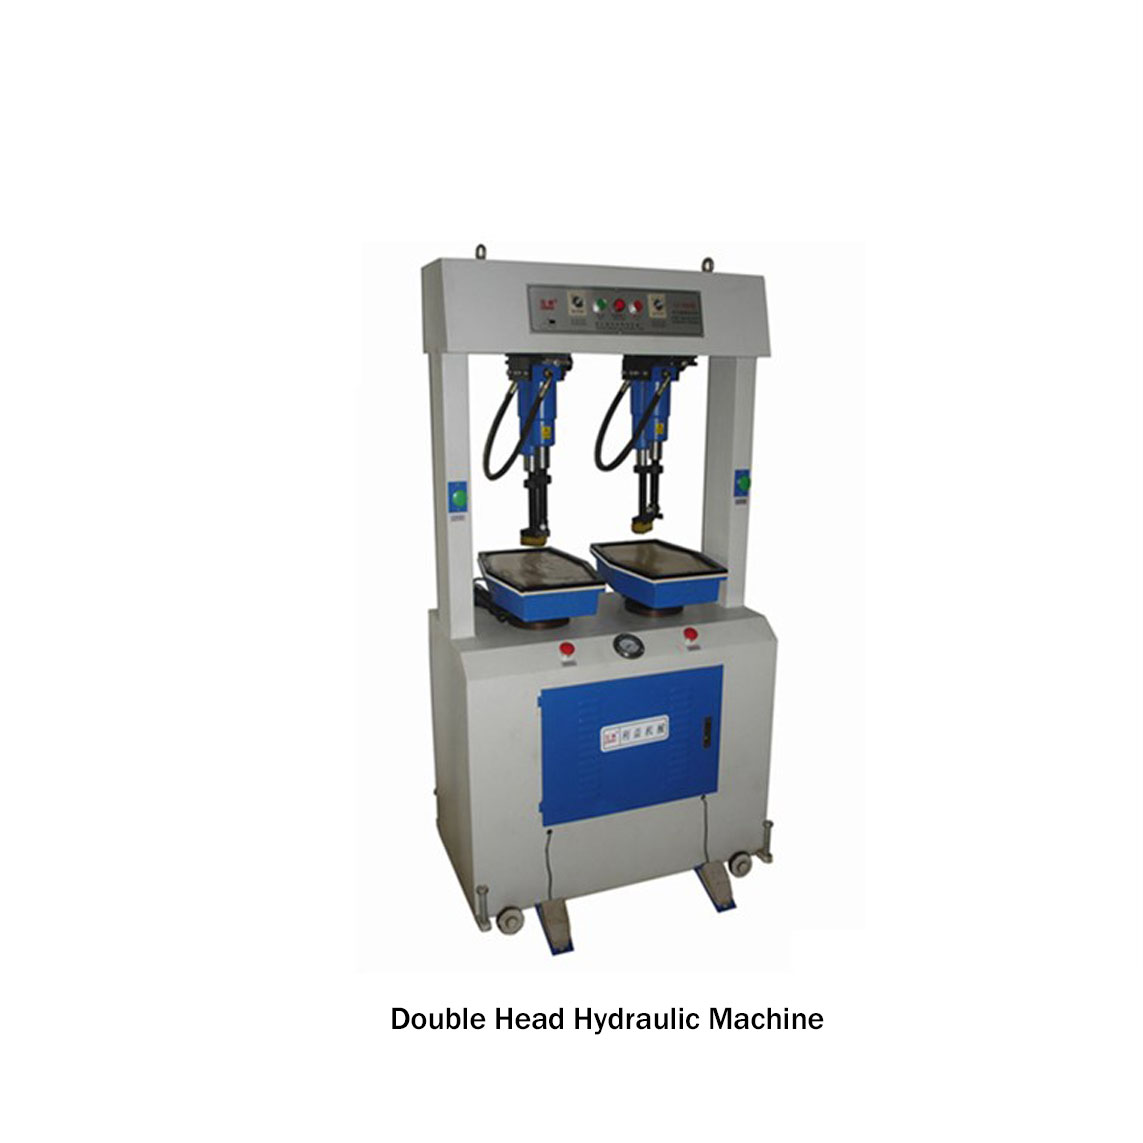 Double Head Hydraulic Machine